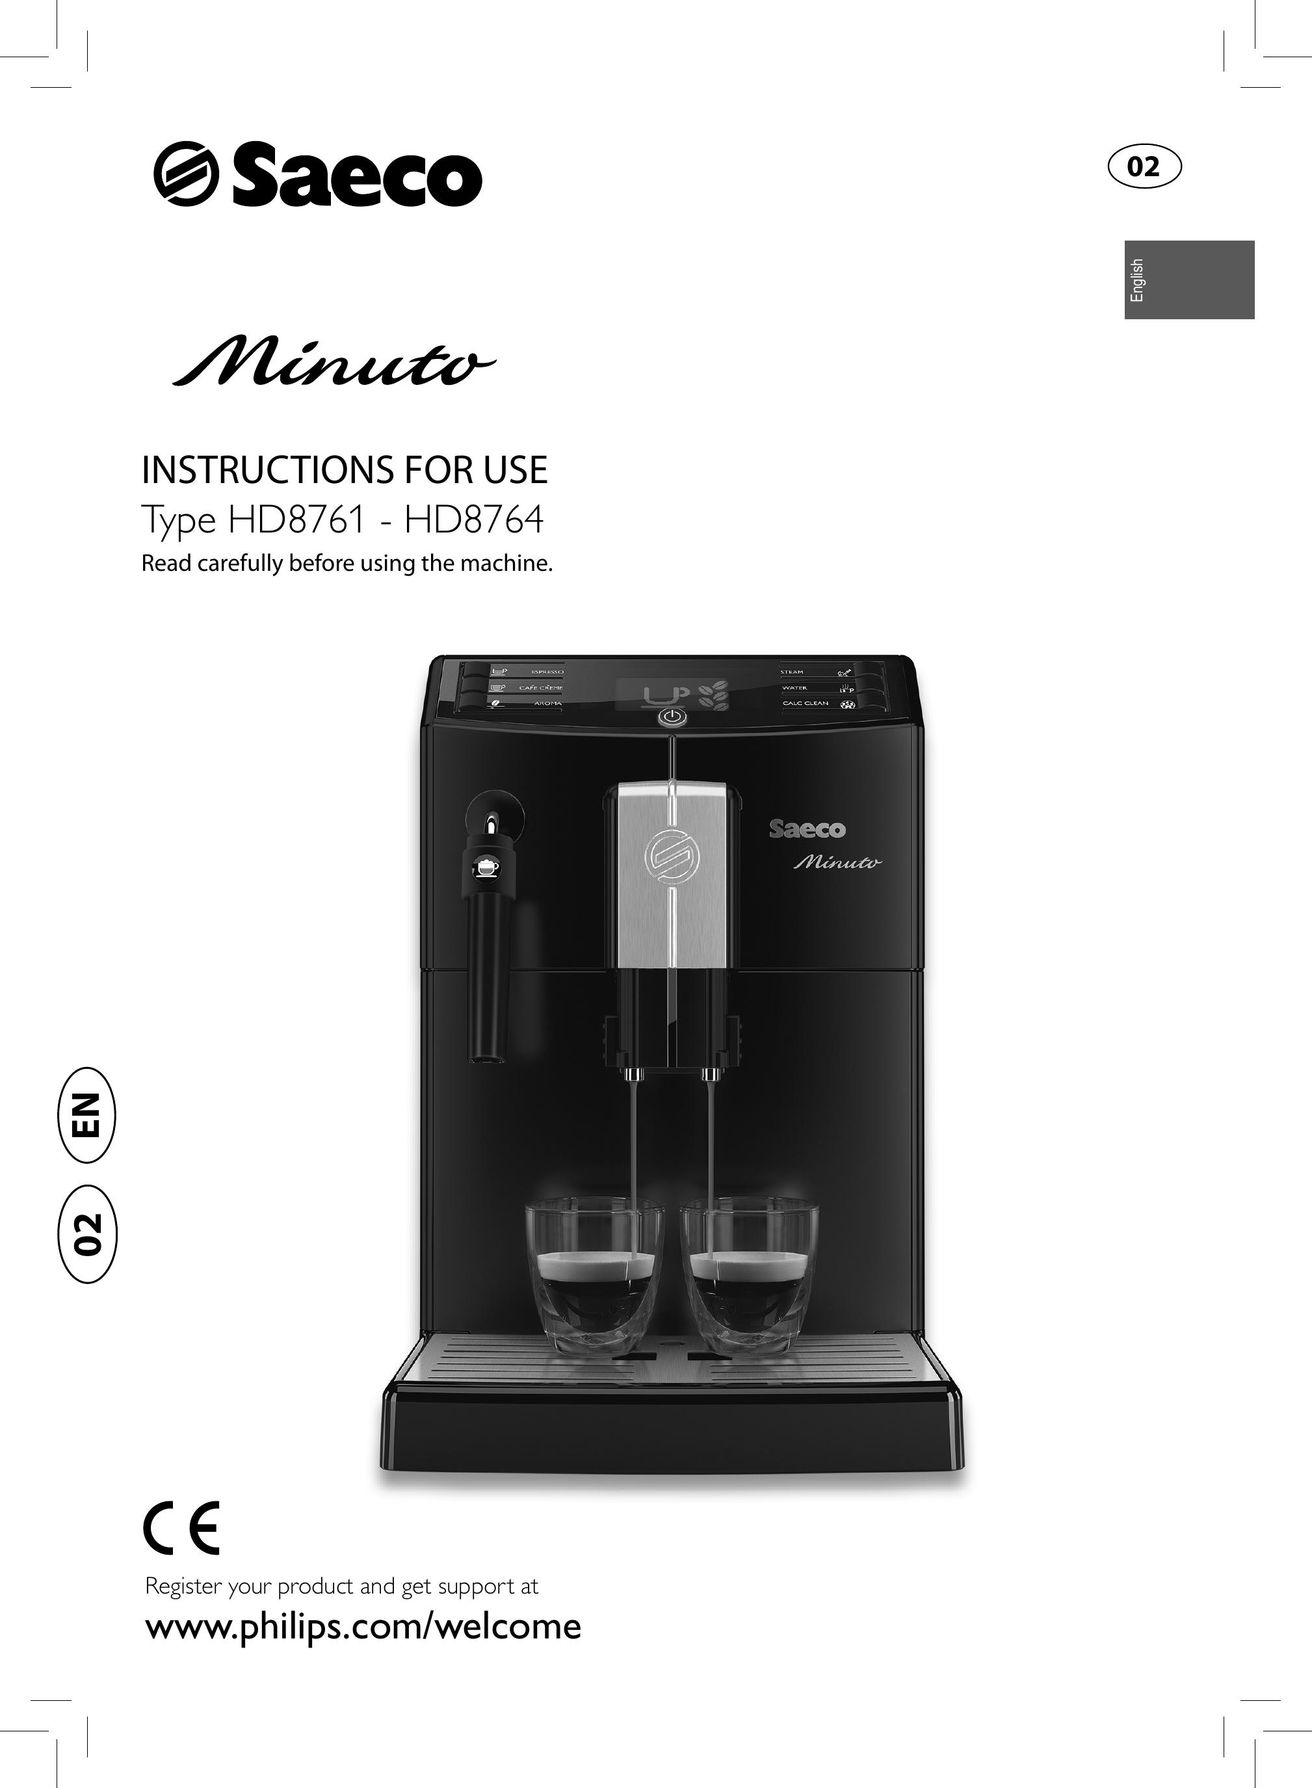 Saeco Coffee Makers HD8764 Coffeemaker User Manual